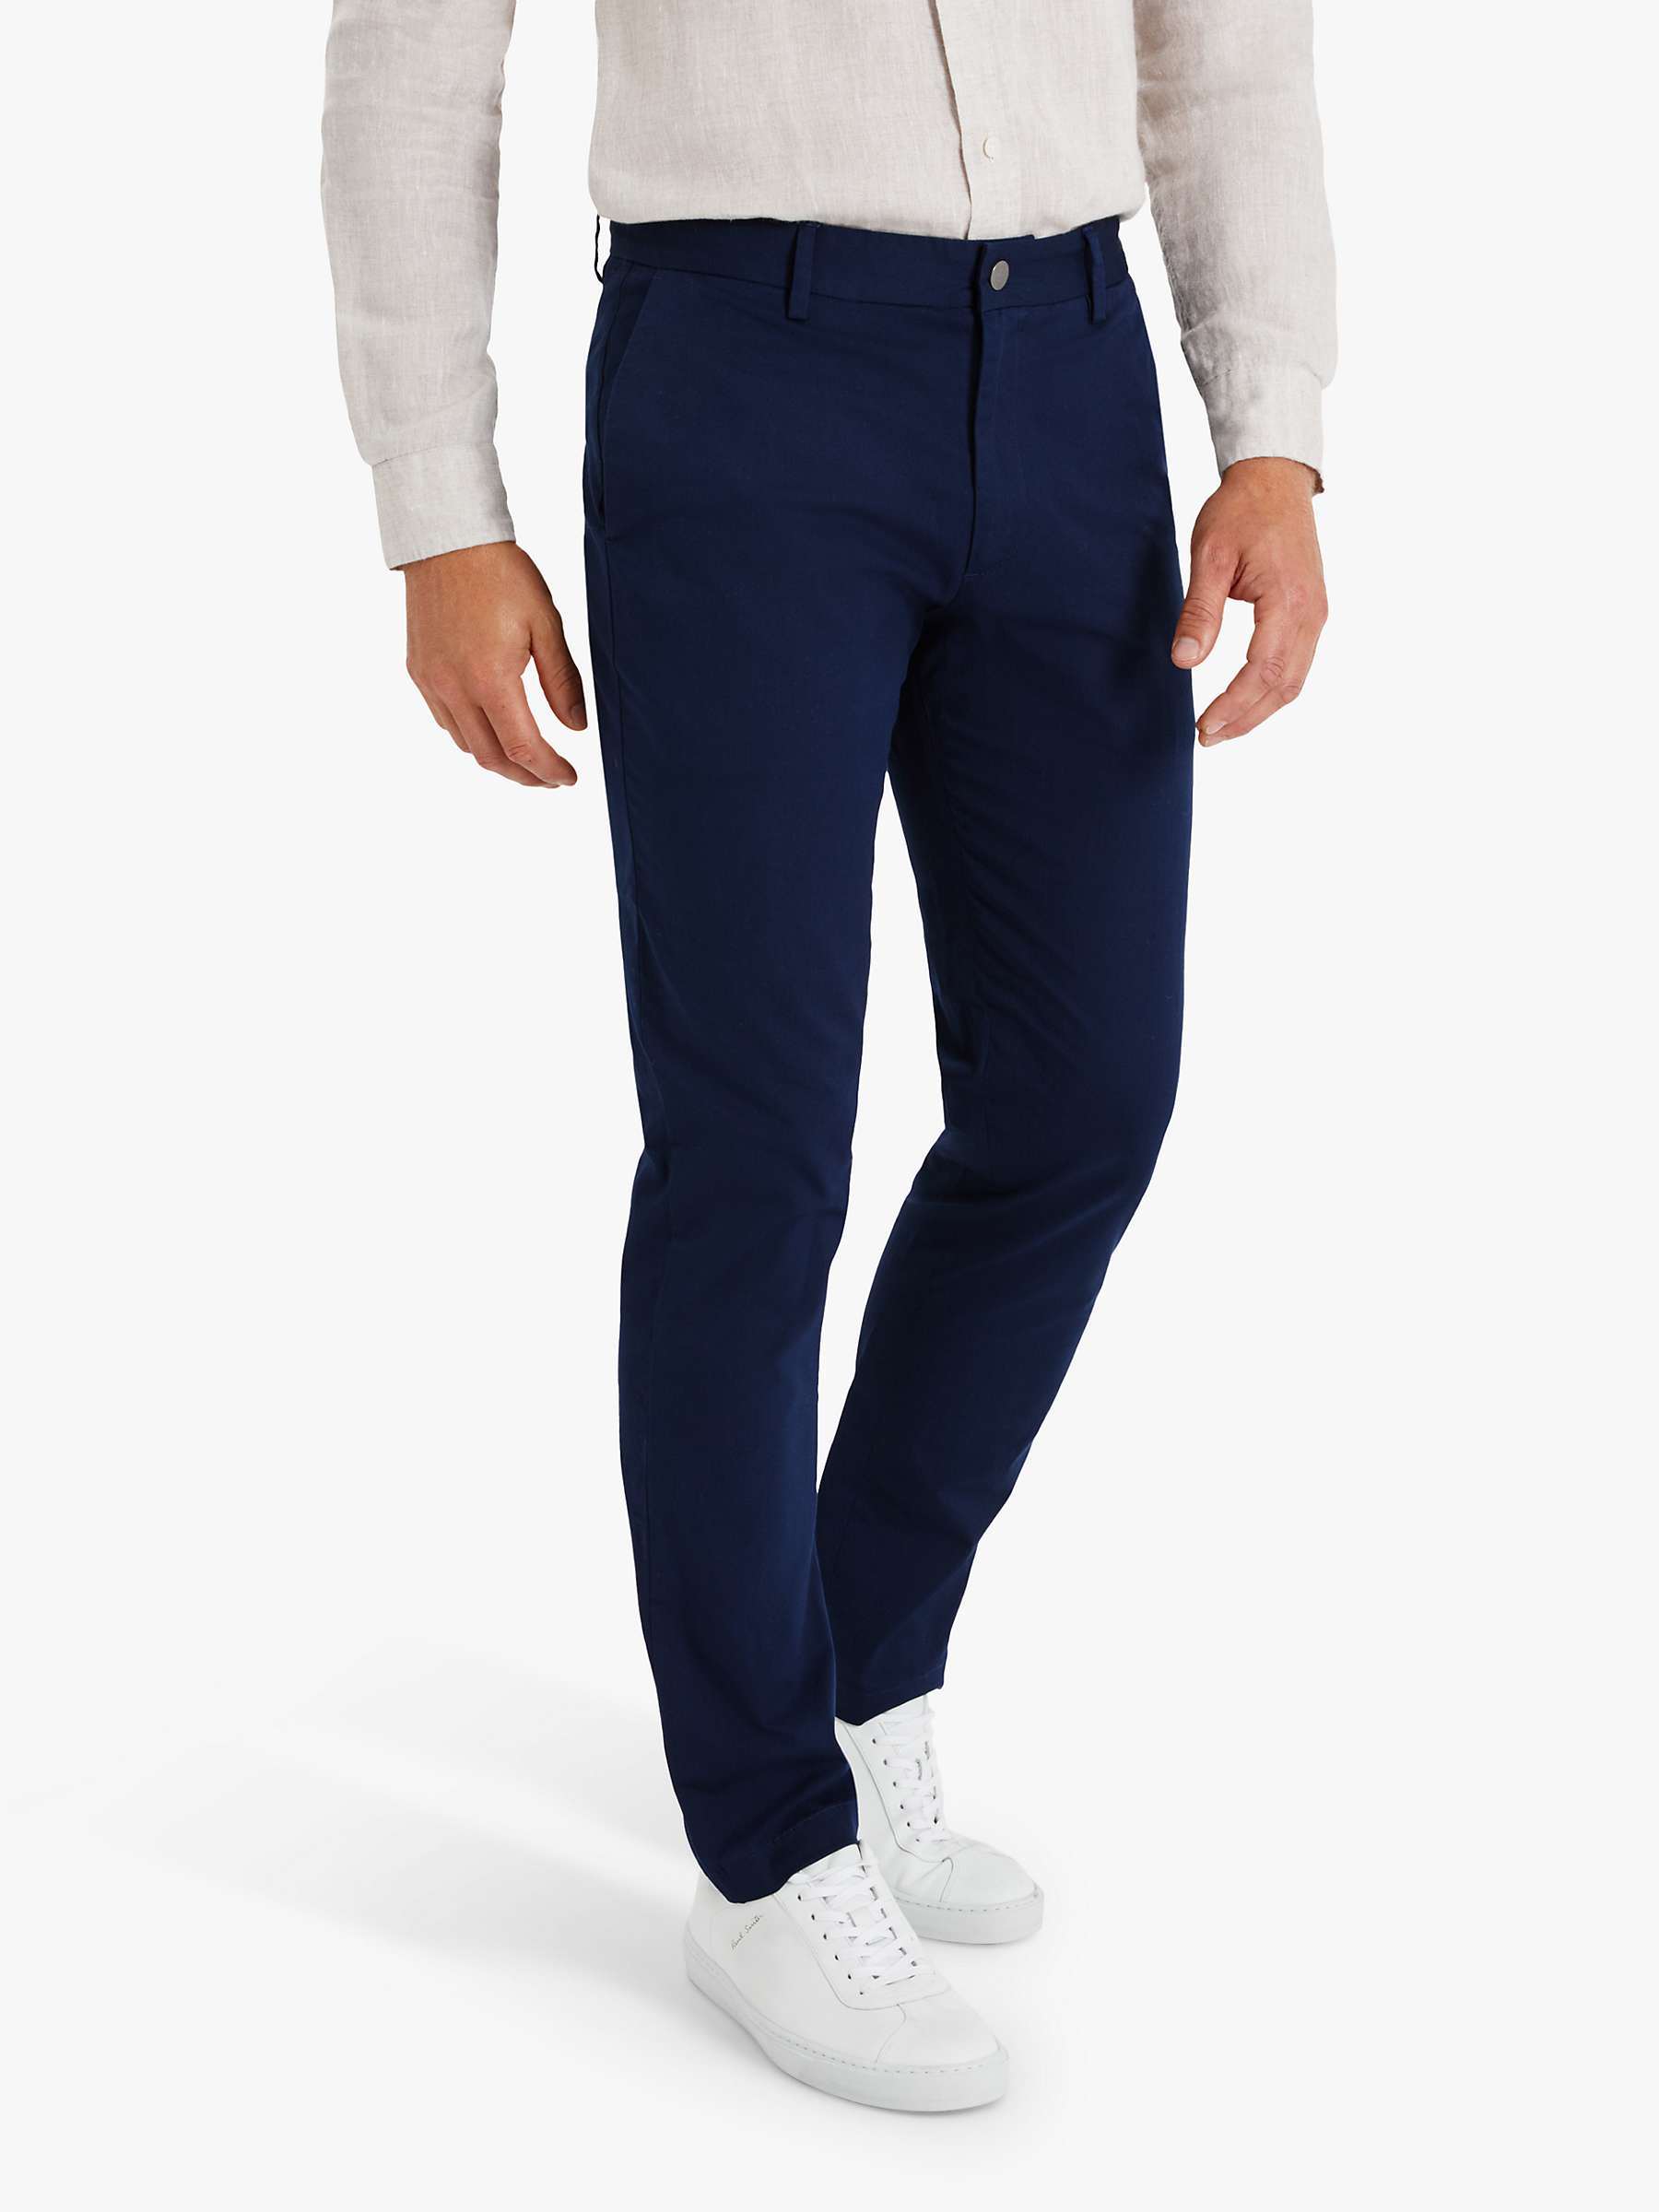 Buy SPOKE Lightweights Cotton Blend Regular Thigh Trousers Online at johnlewis.com